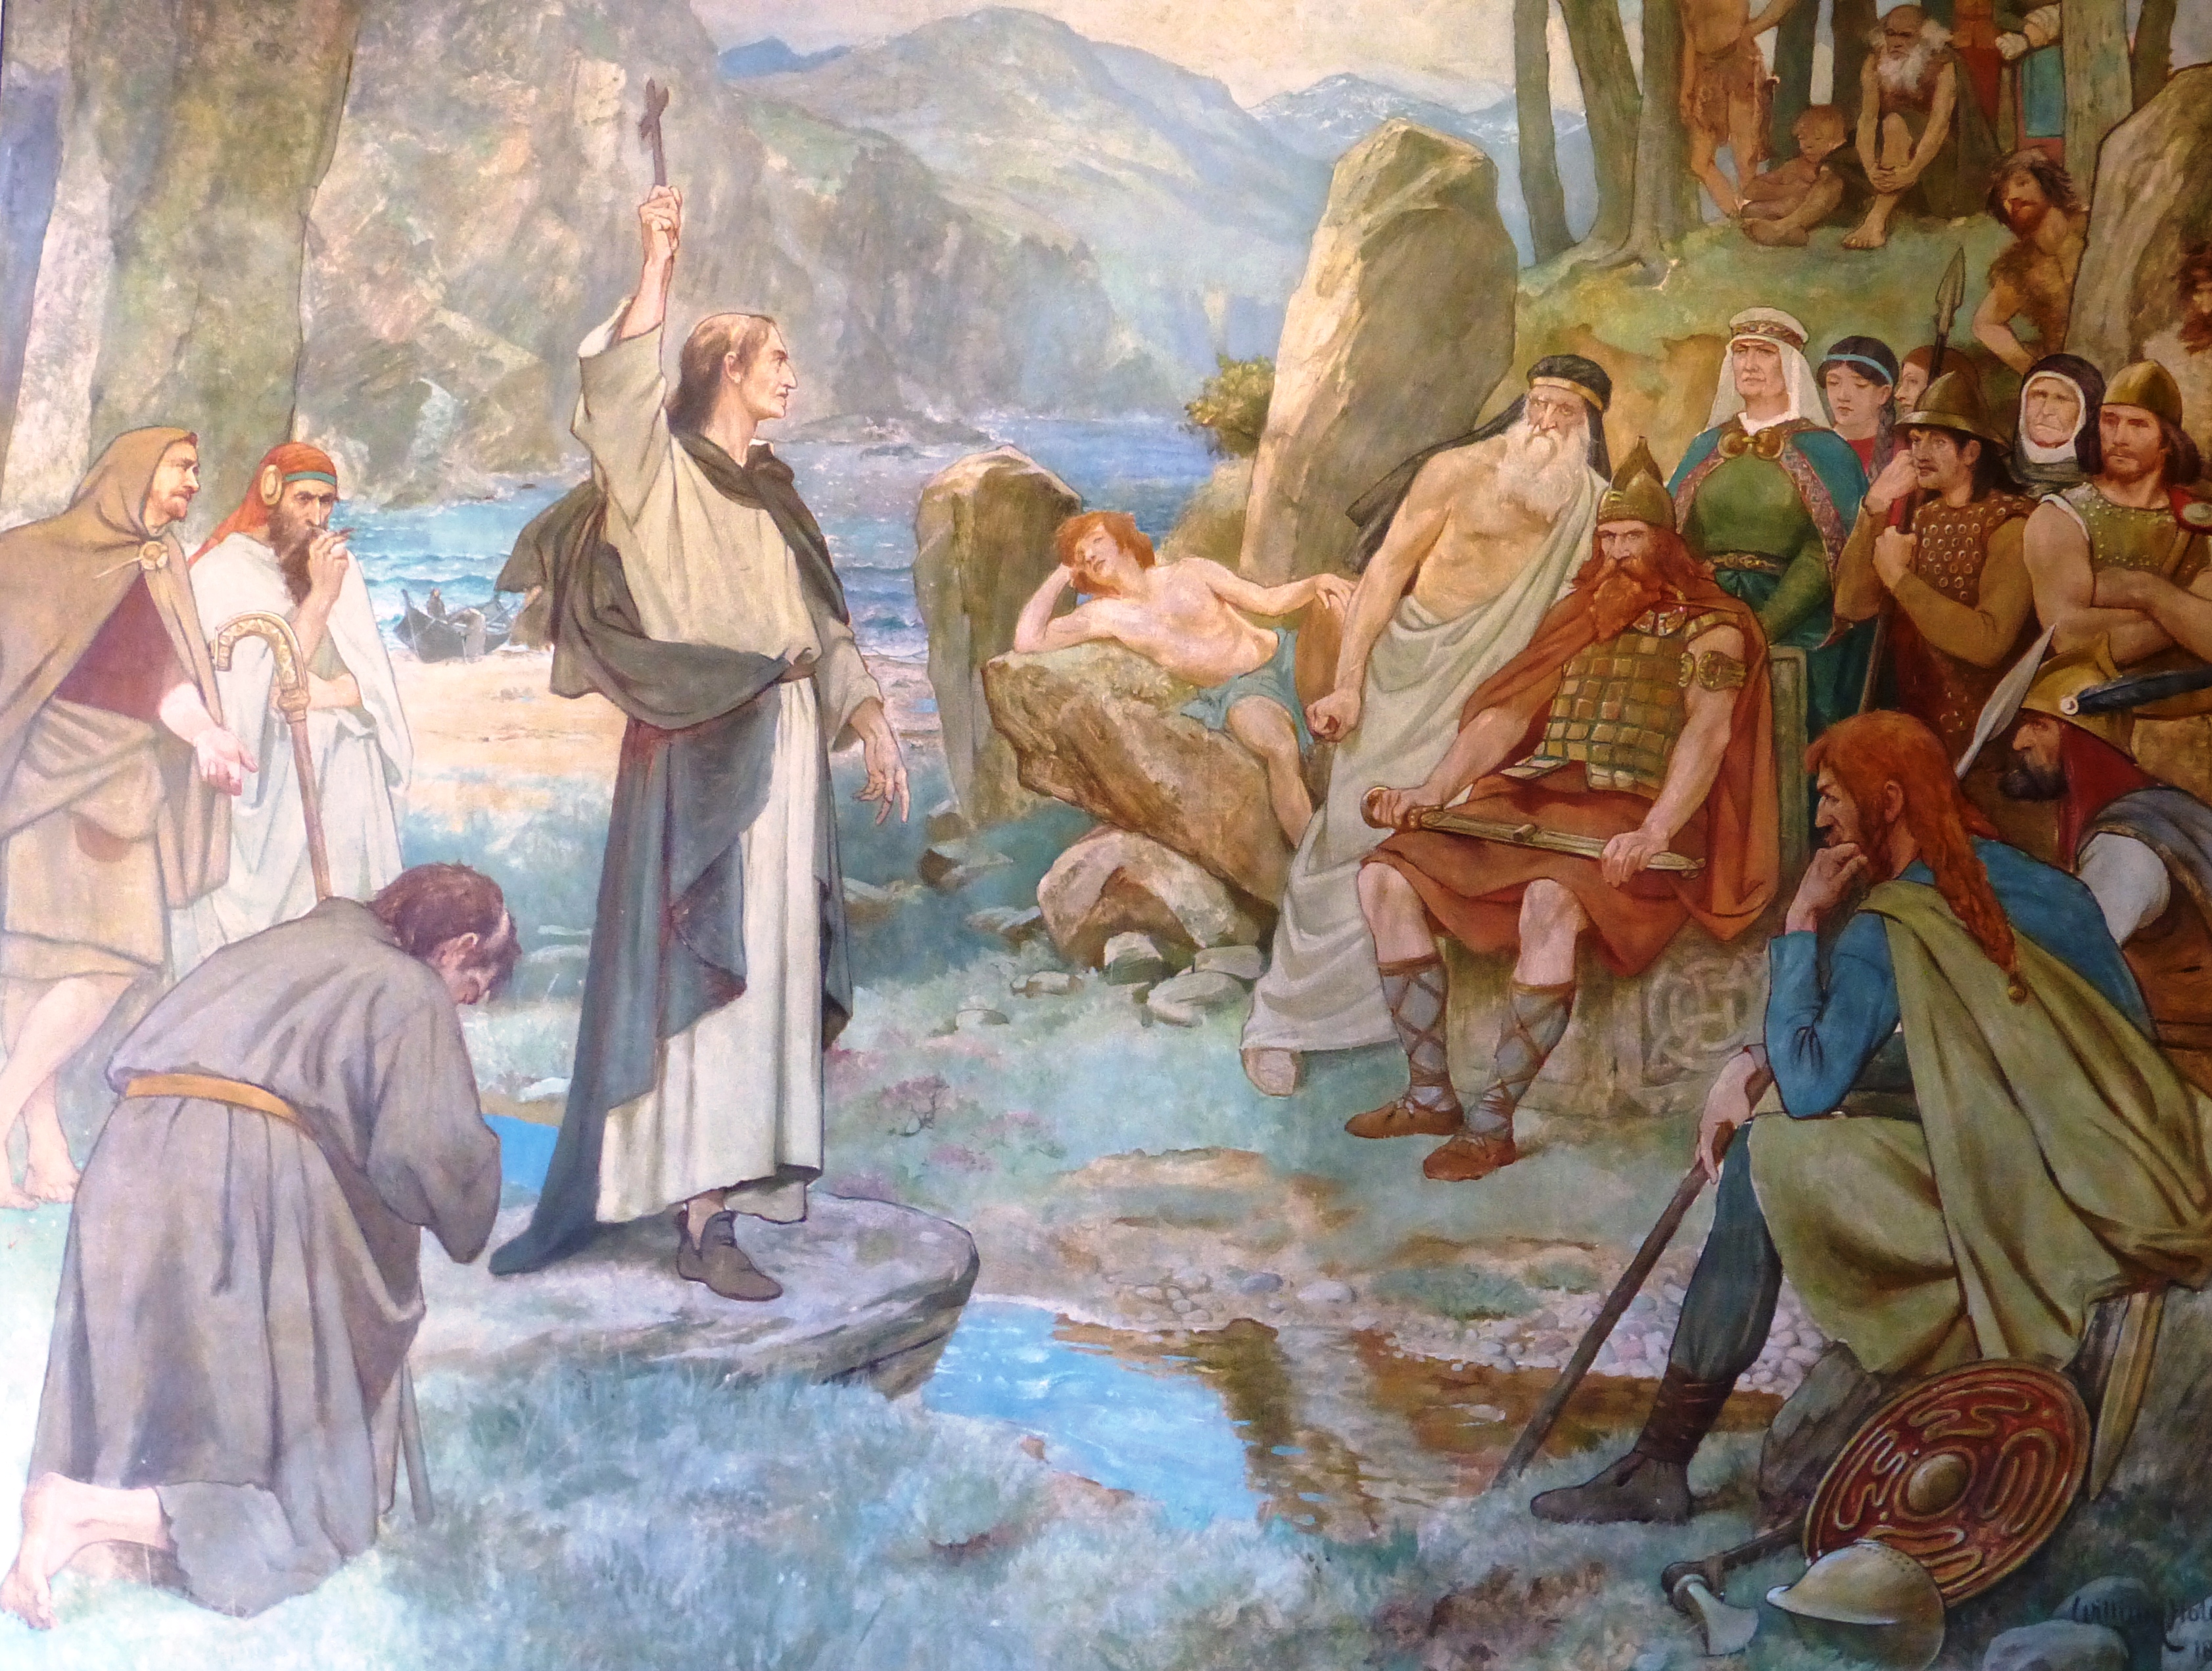 Saint Columba converting the Picts